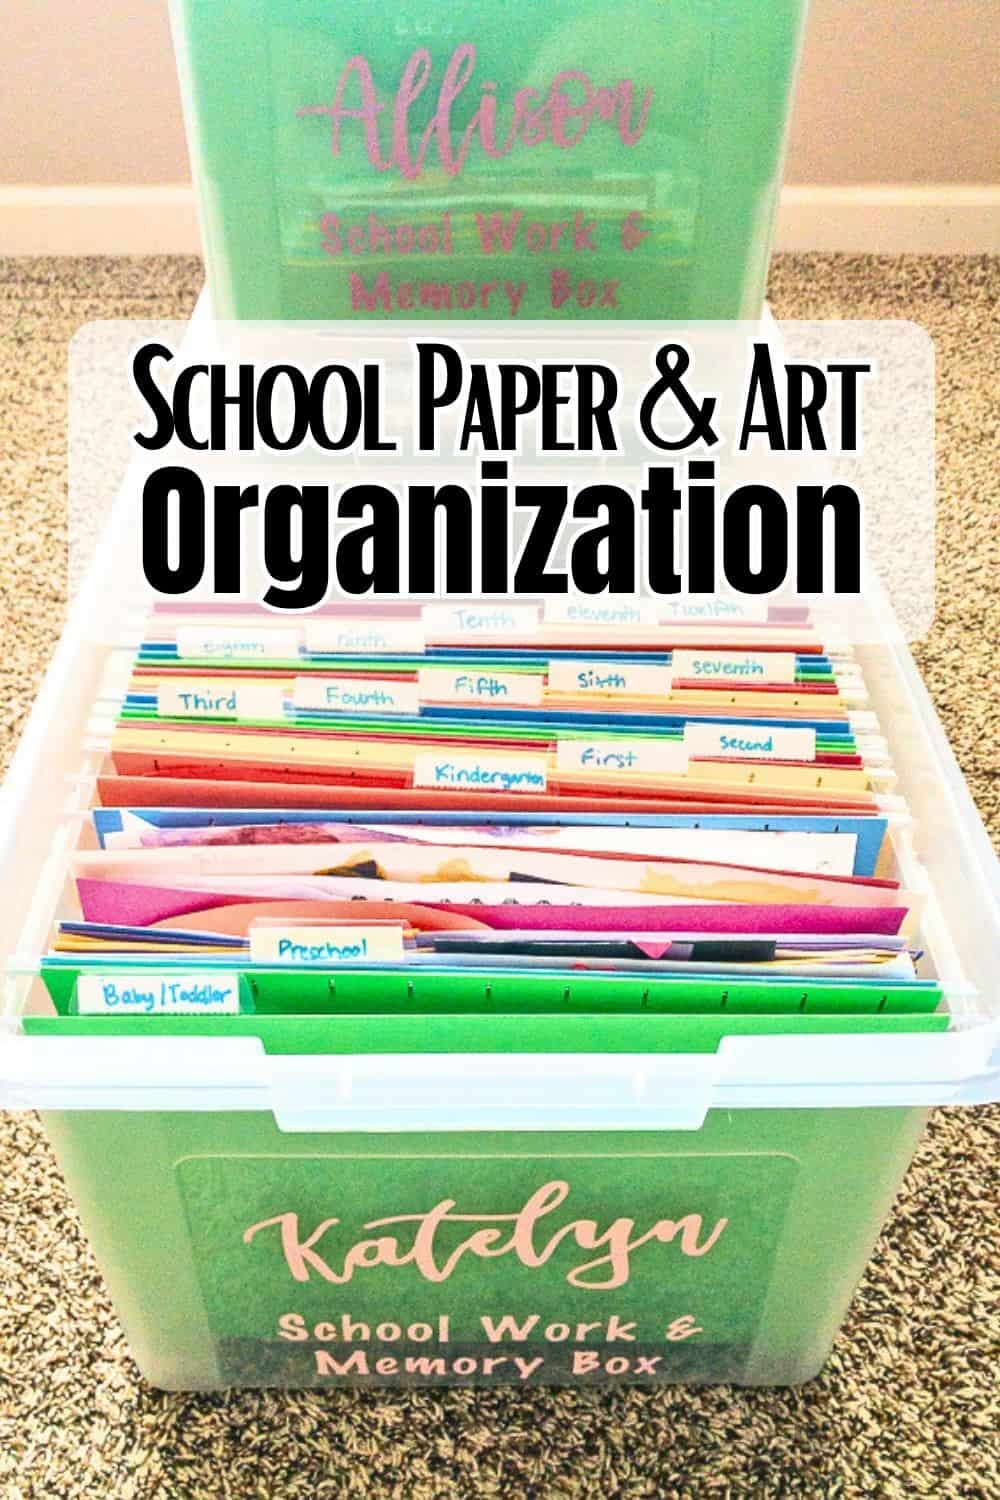 How to organize memorabilia & kids' artwork! ❤️ Memory Box Ideas